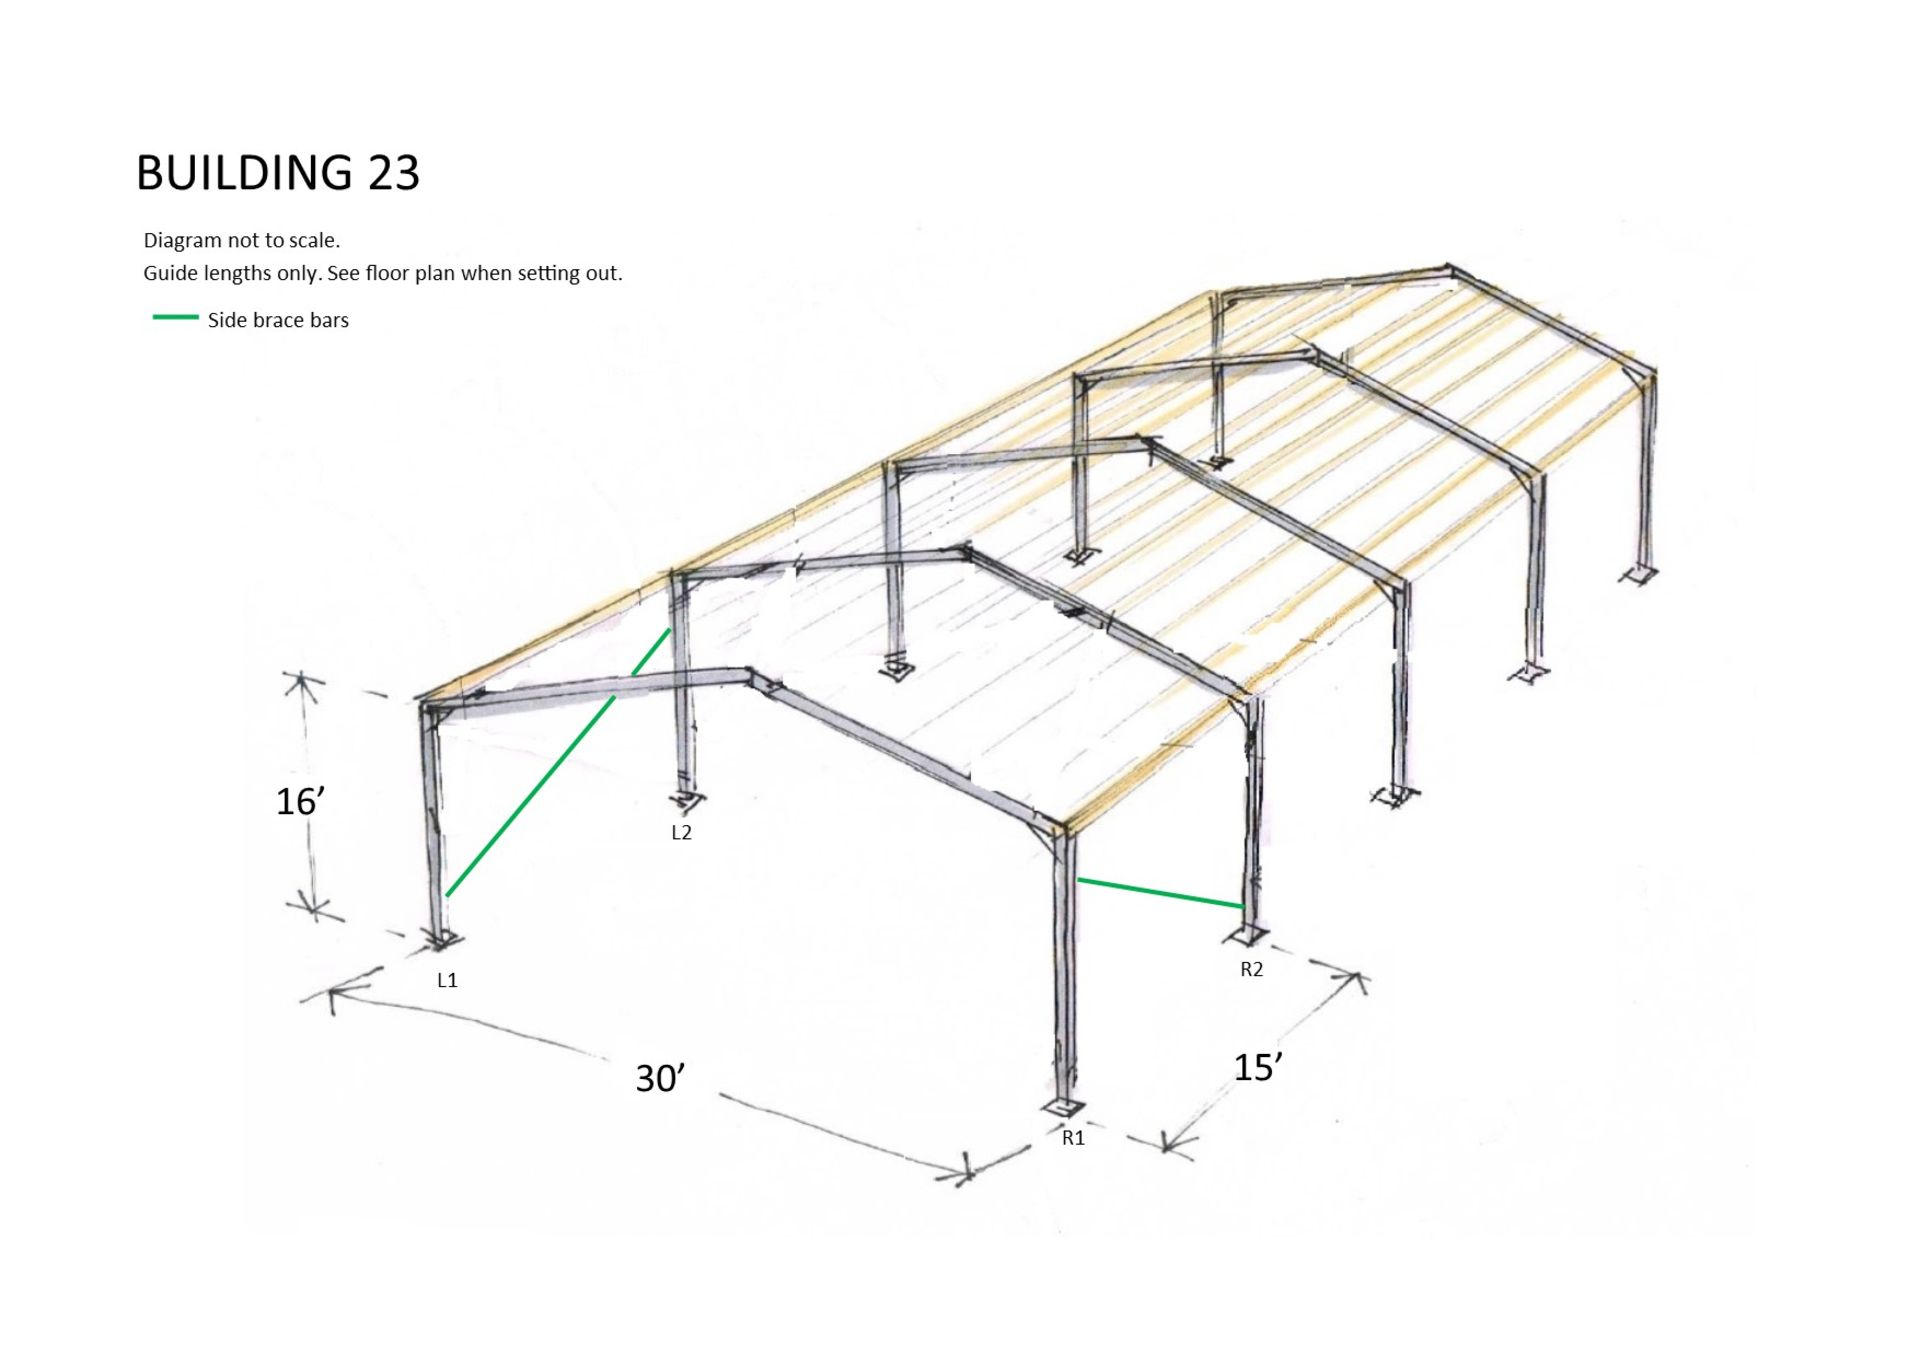 Steel framed building 60ft long x 30 ft wide x 16 ft @ eaves 12 .5 deg roof pitch - Image 3 of 9